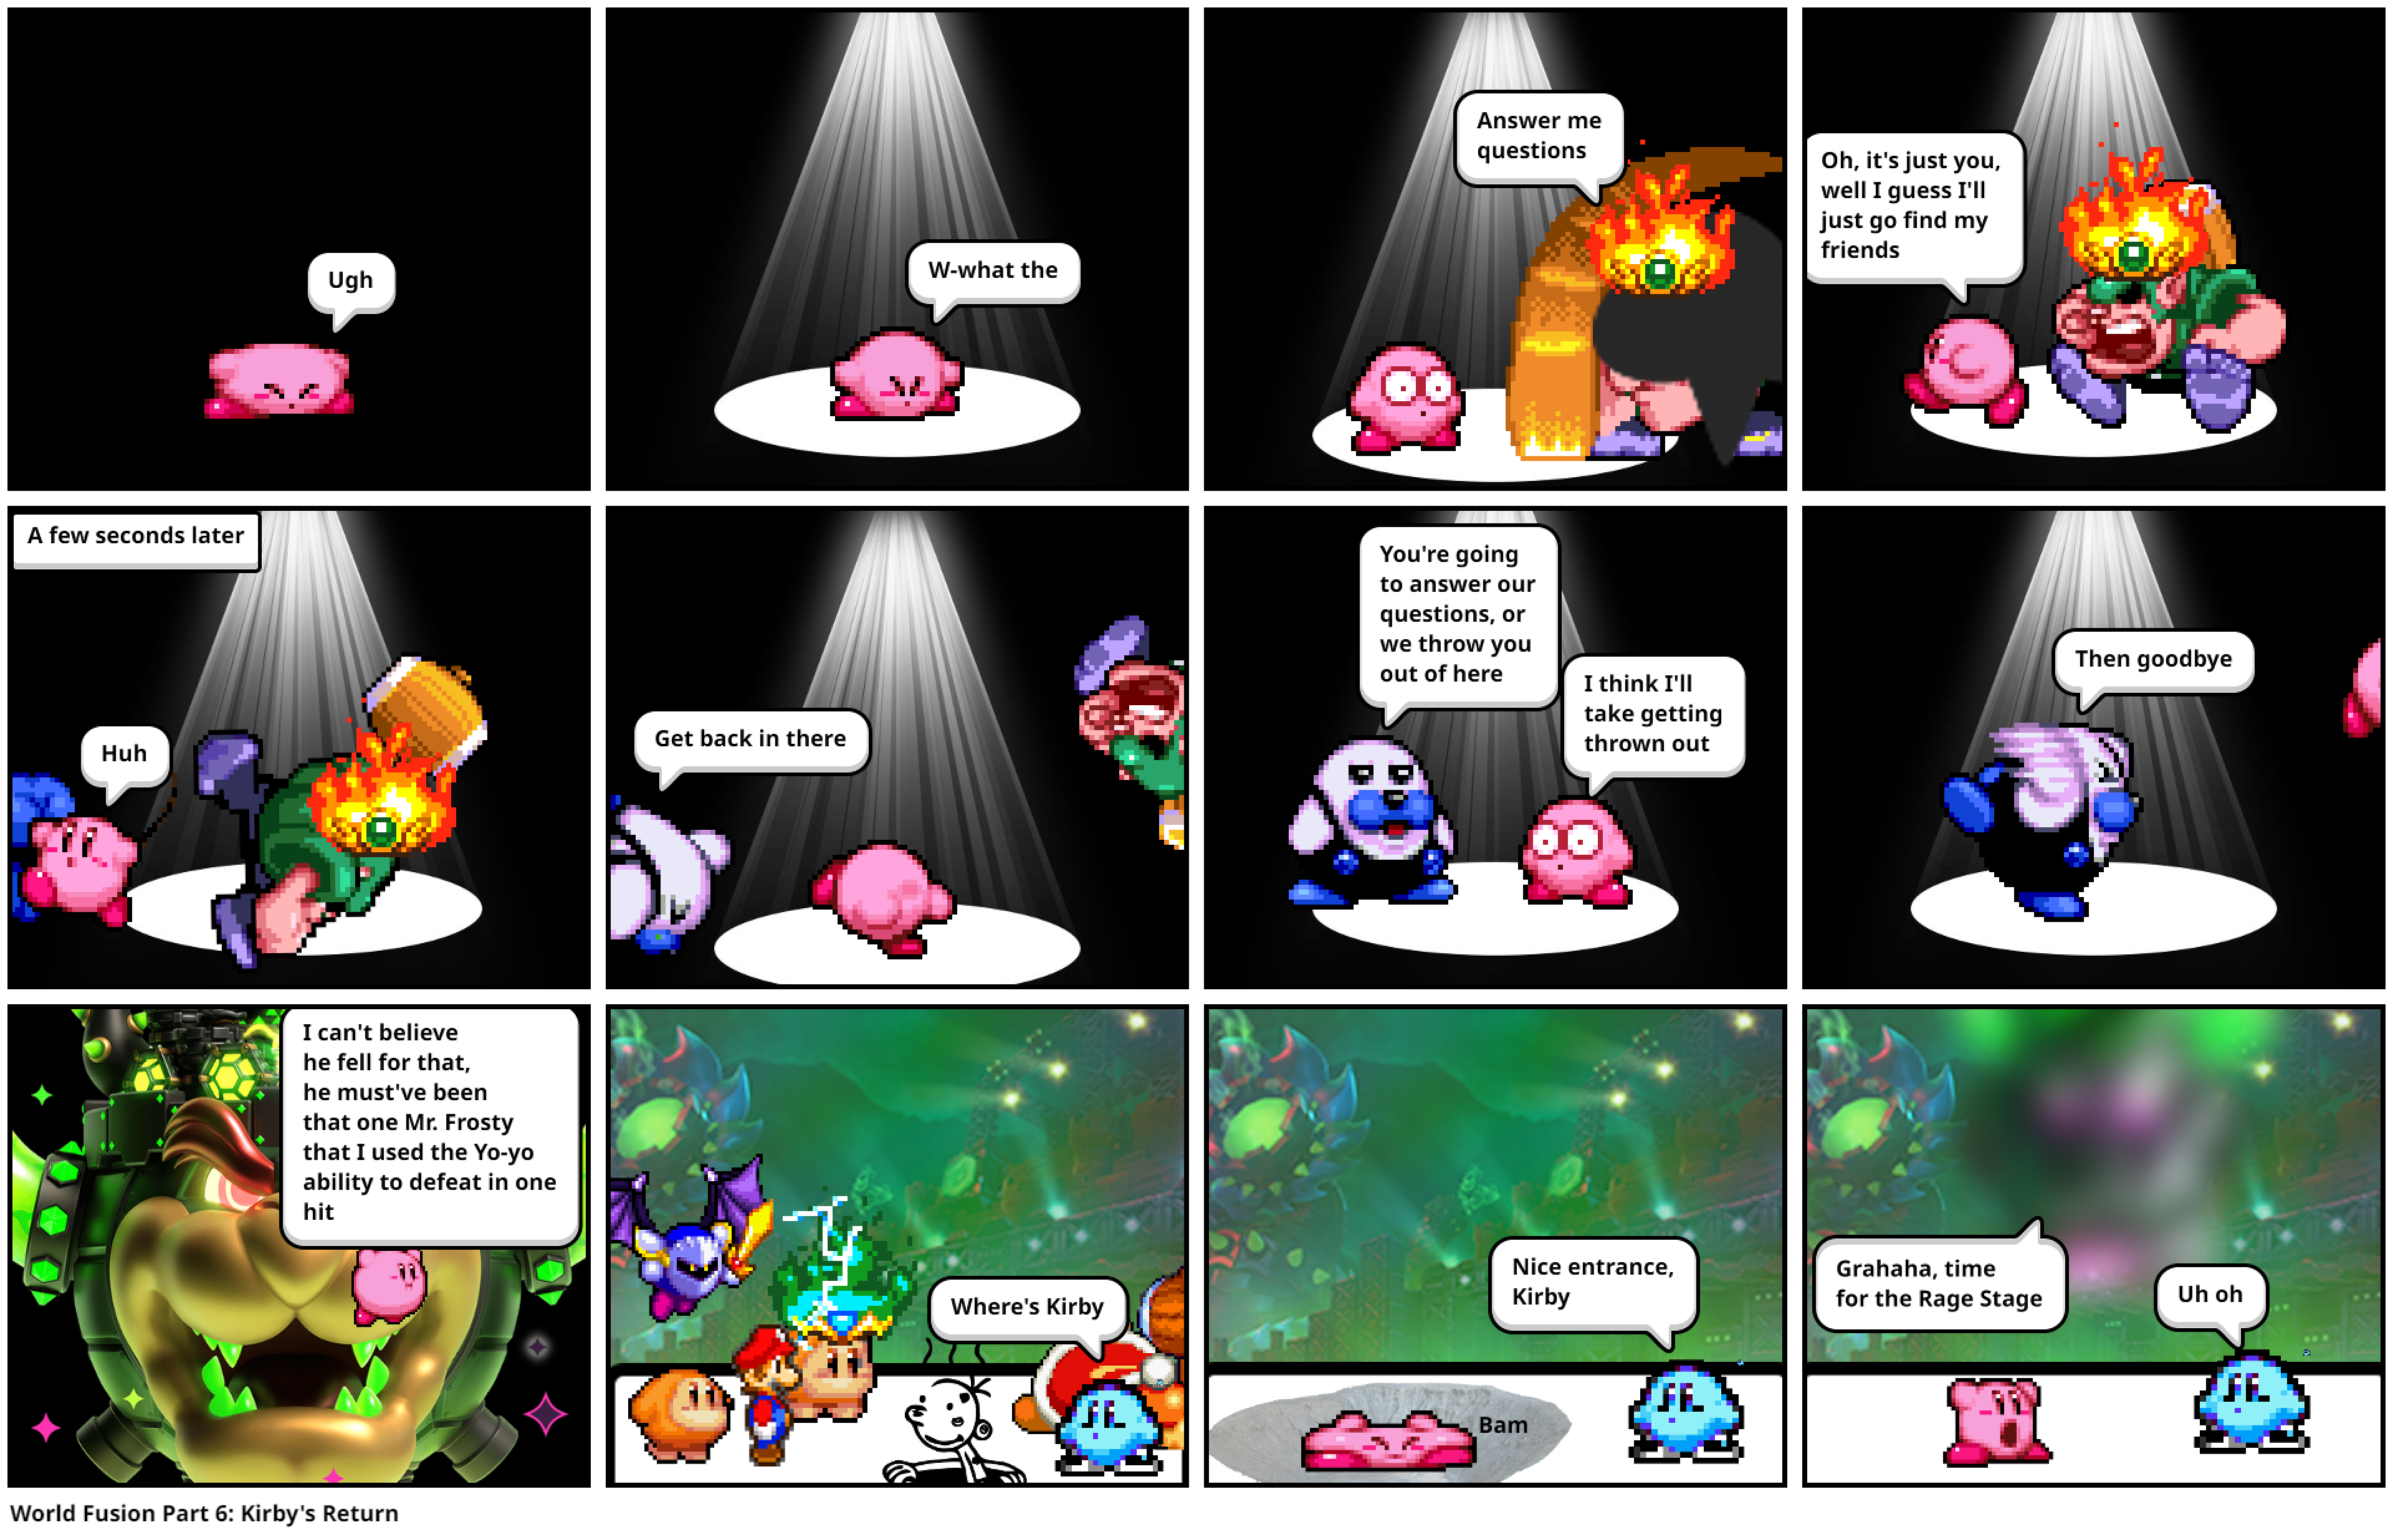 World Fusion Part 6: Kirby's Return